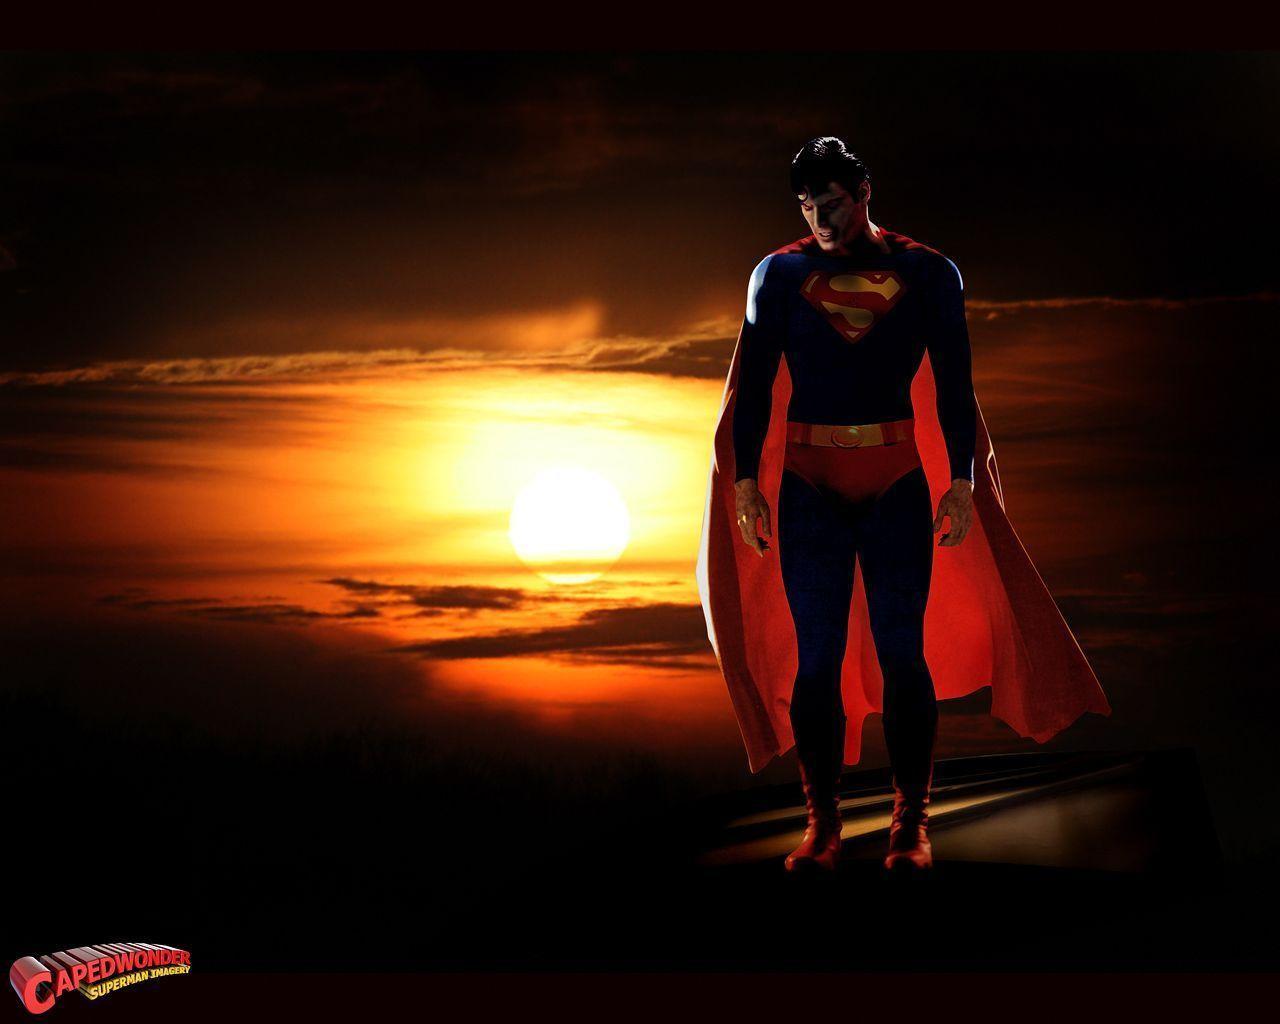 Wallpaper For > Awesome Superman Desktop Background HD